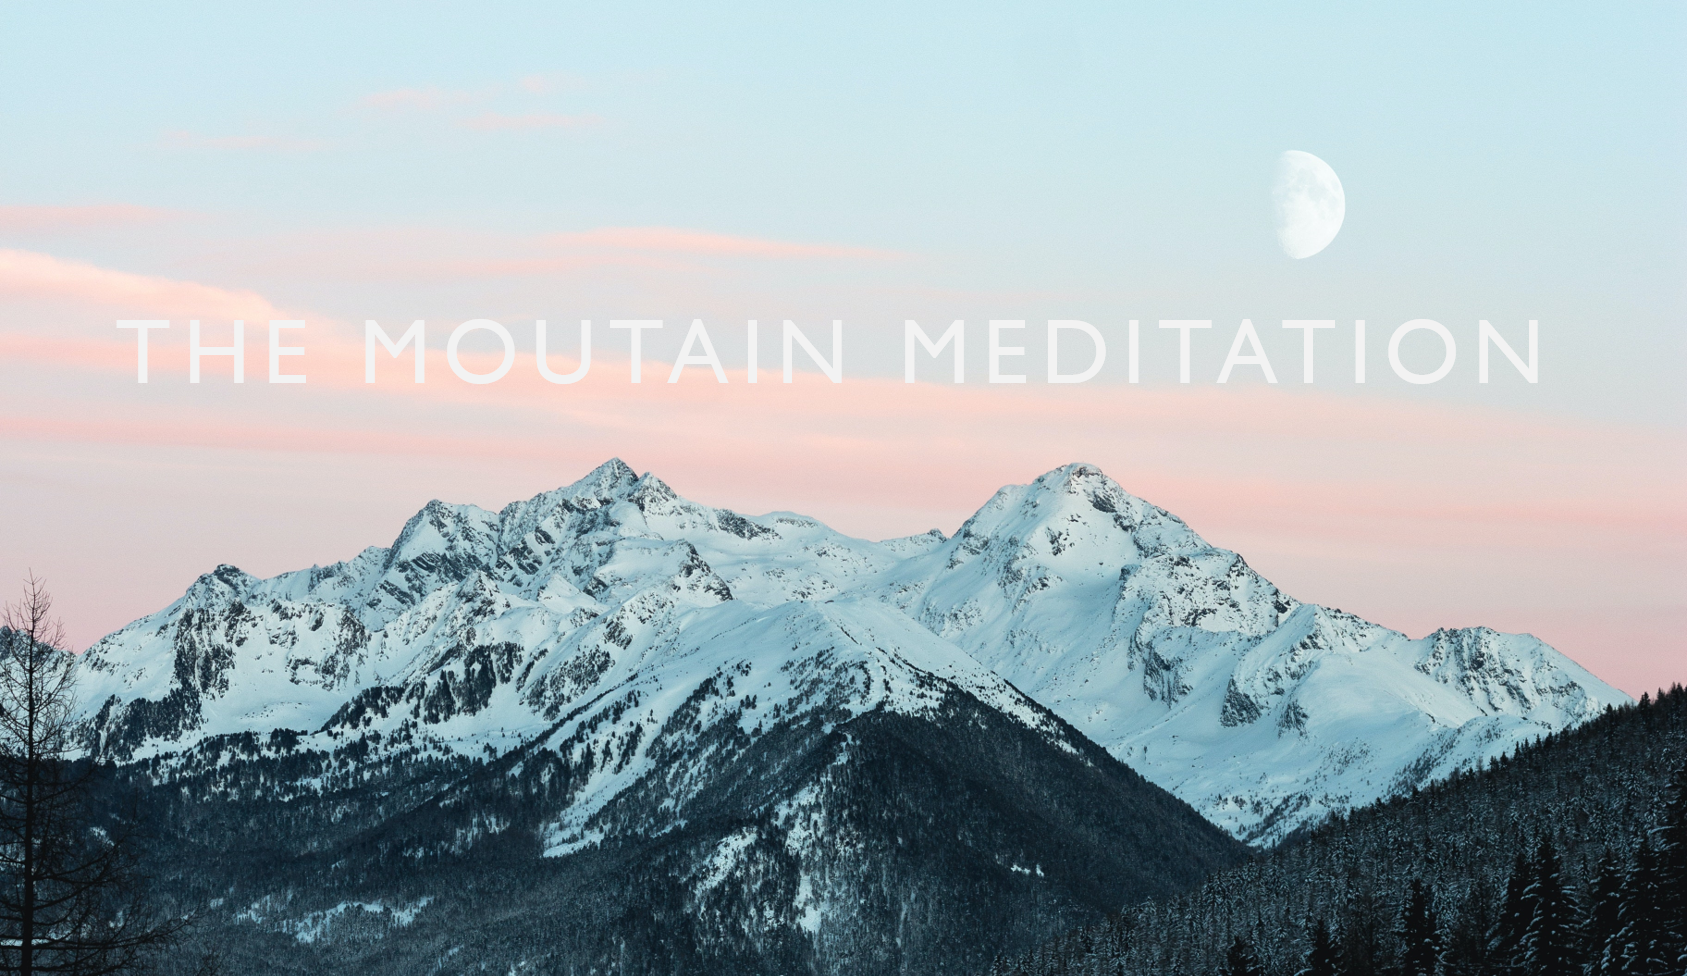 MOUNTAIN MEDITATION GUIDED MEDITATION MINDFULNESS MBSR